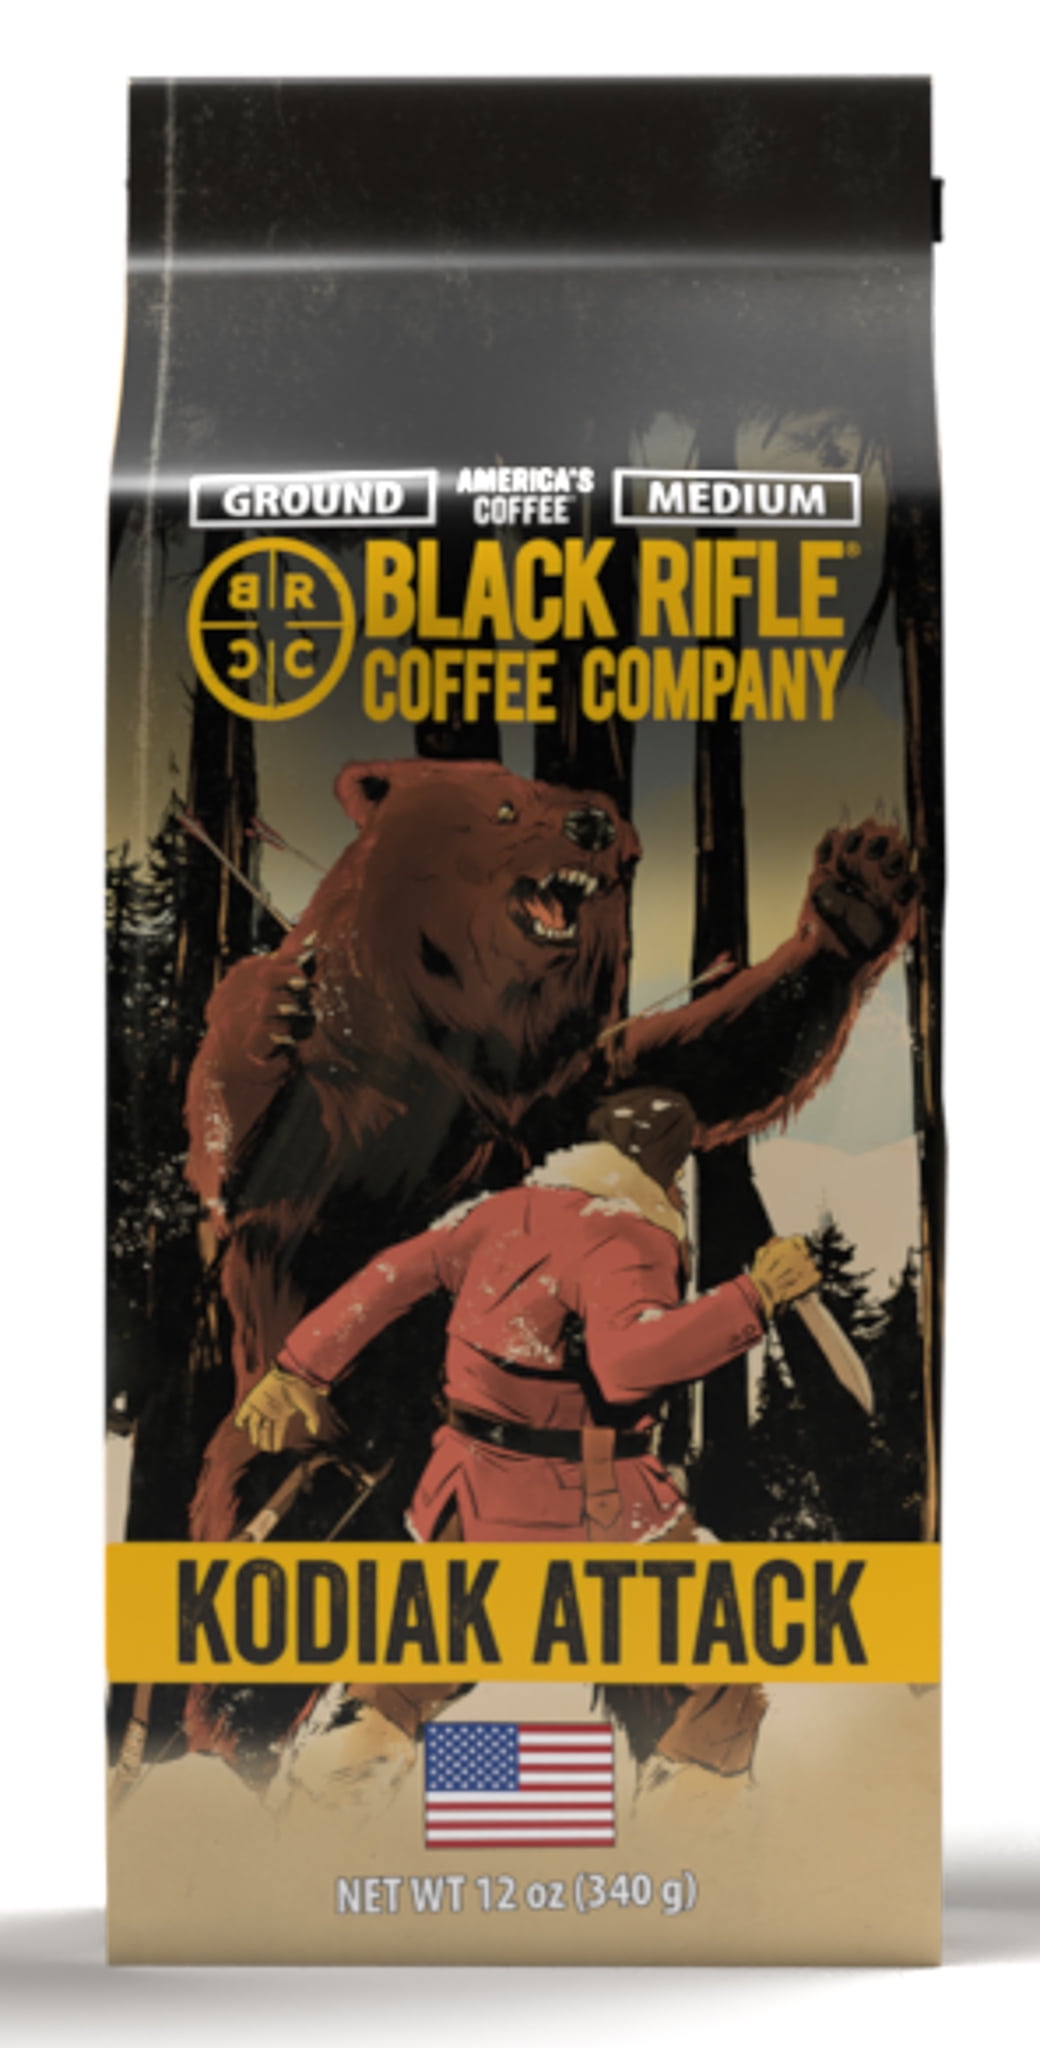 SToK Black, Unsweetened, Medium Roast Arabica-Based Blend Cold Brew Coffee,  48 fl oz Bottle 